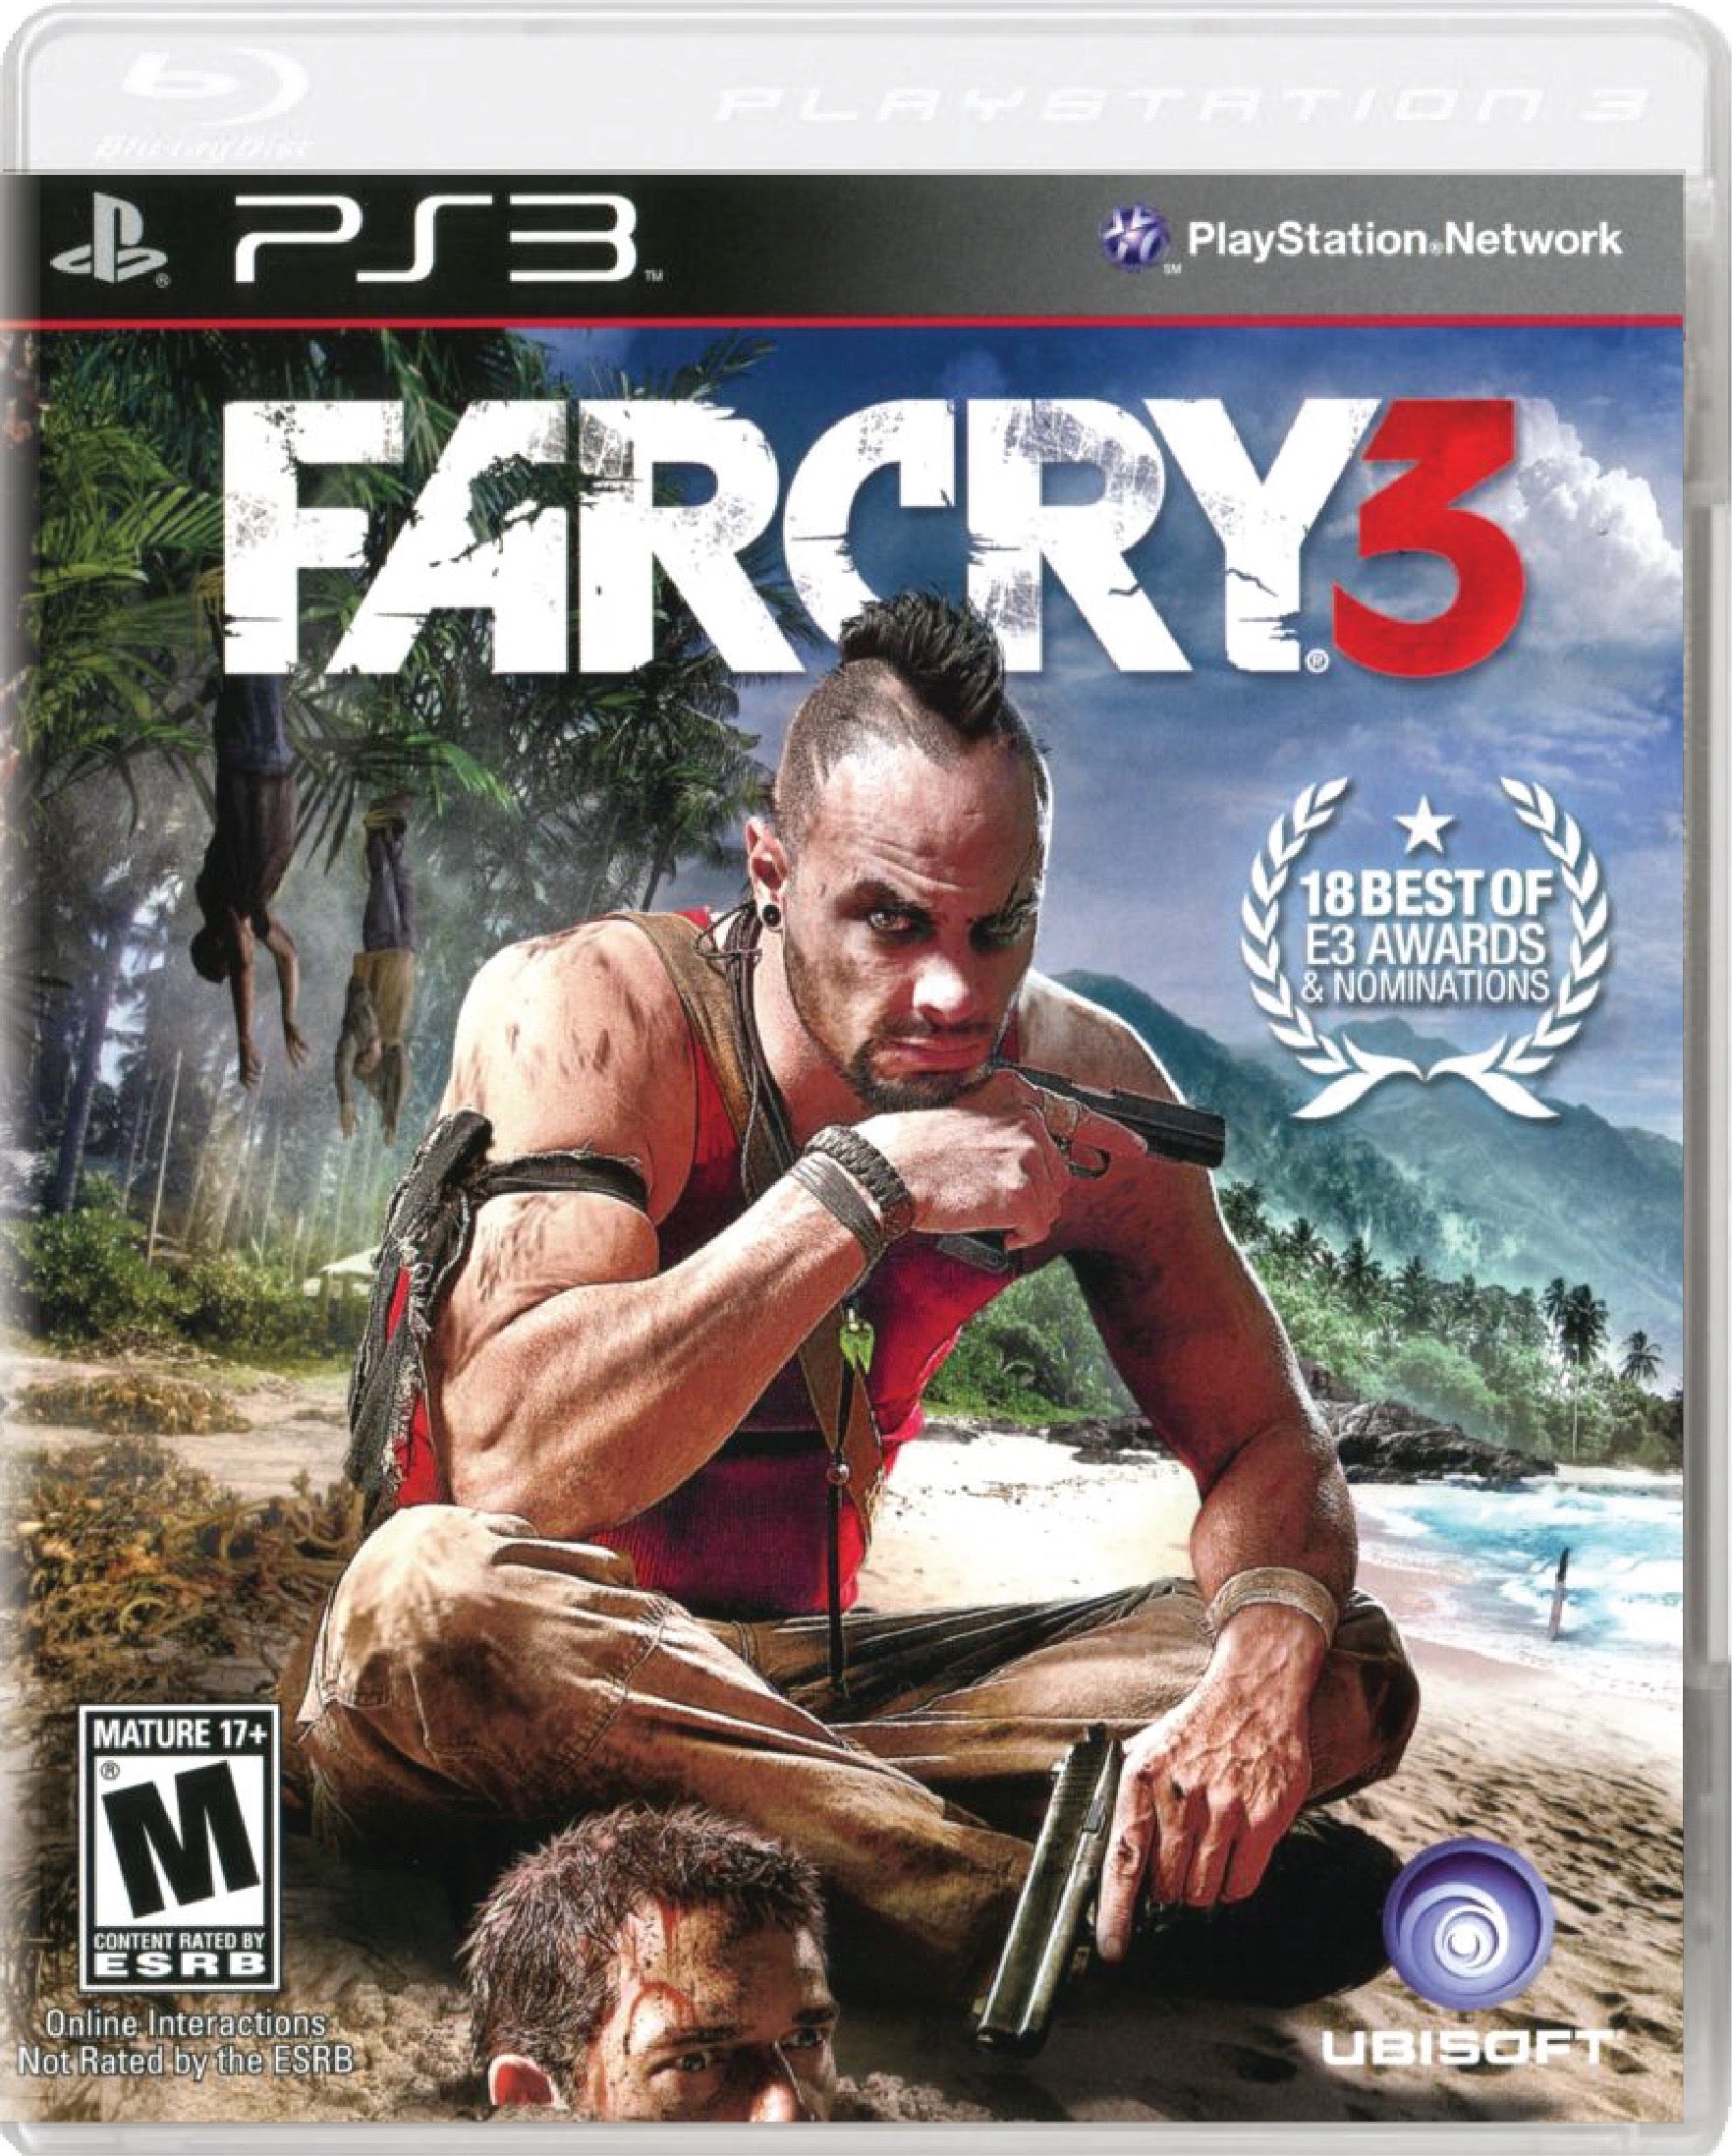 Far Cry 3 Cover Art